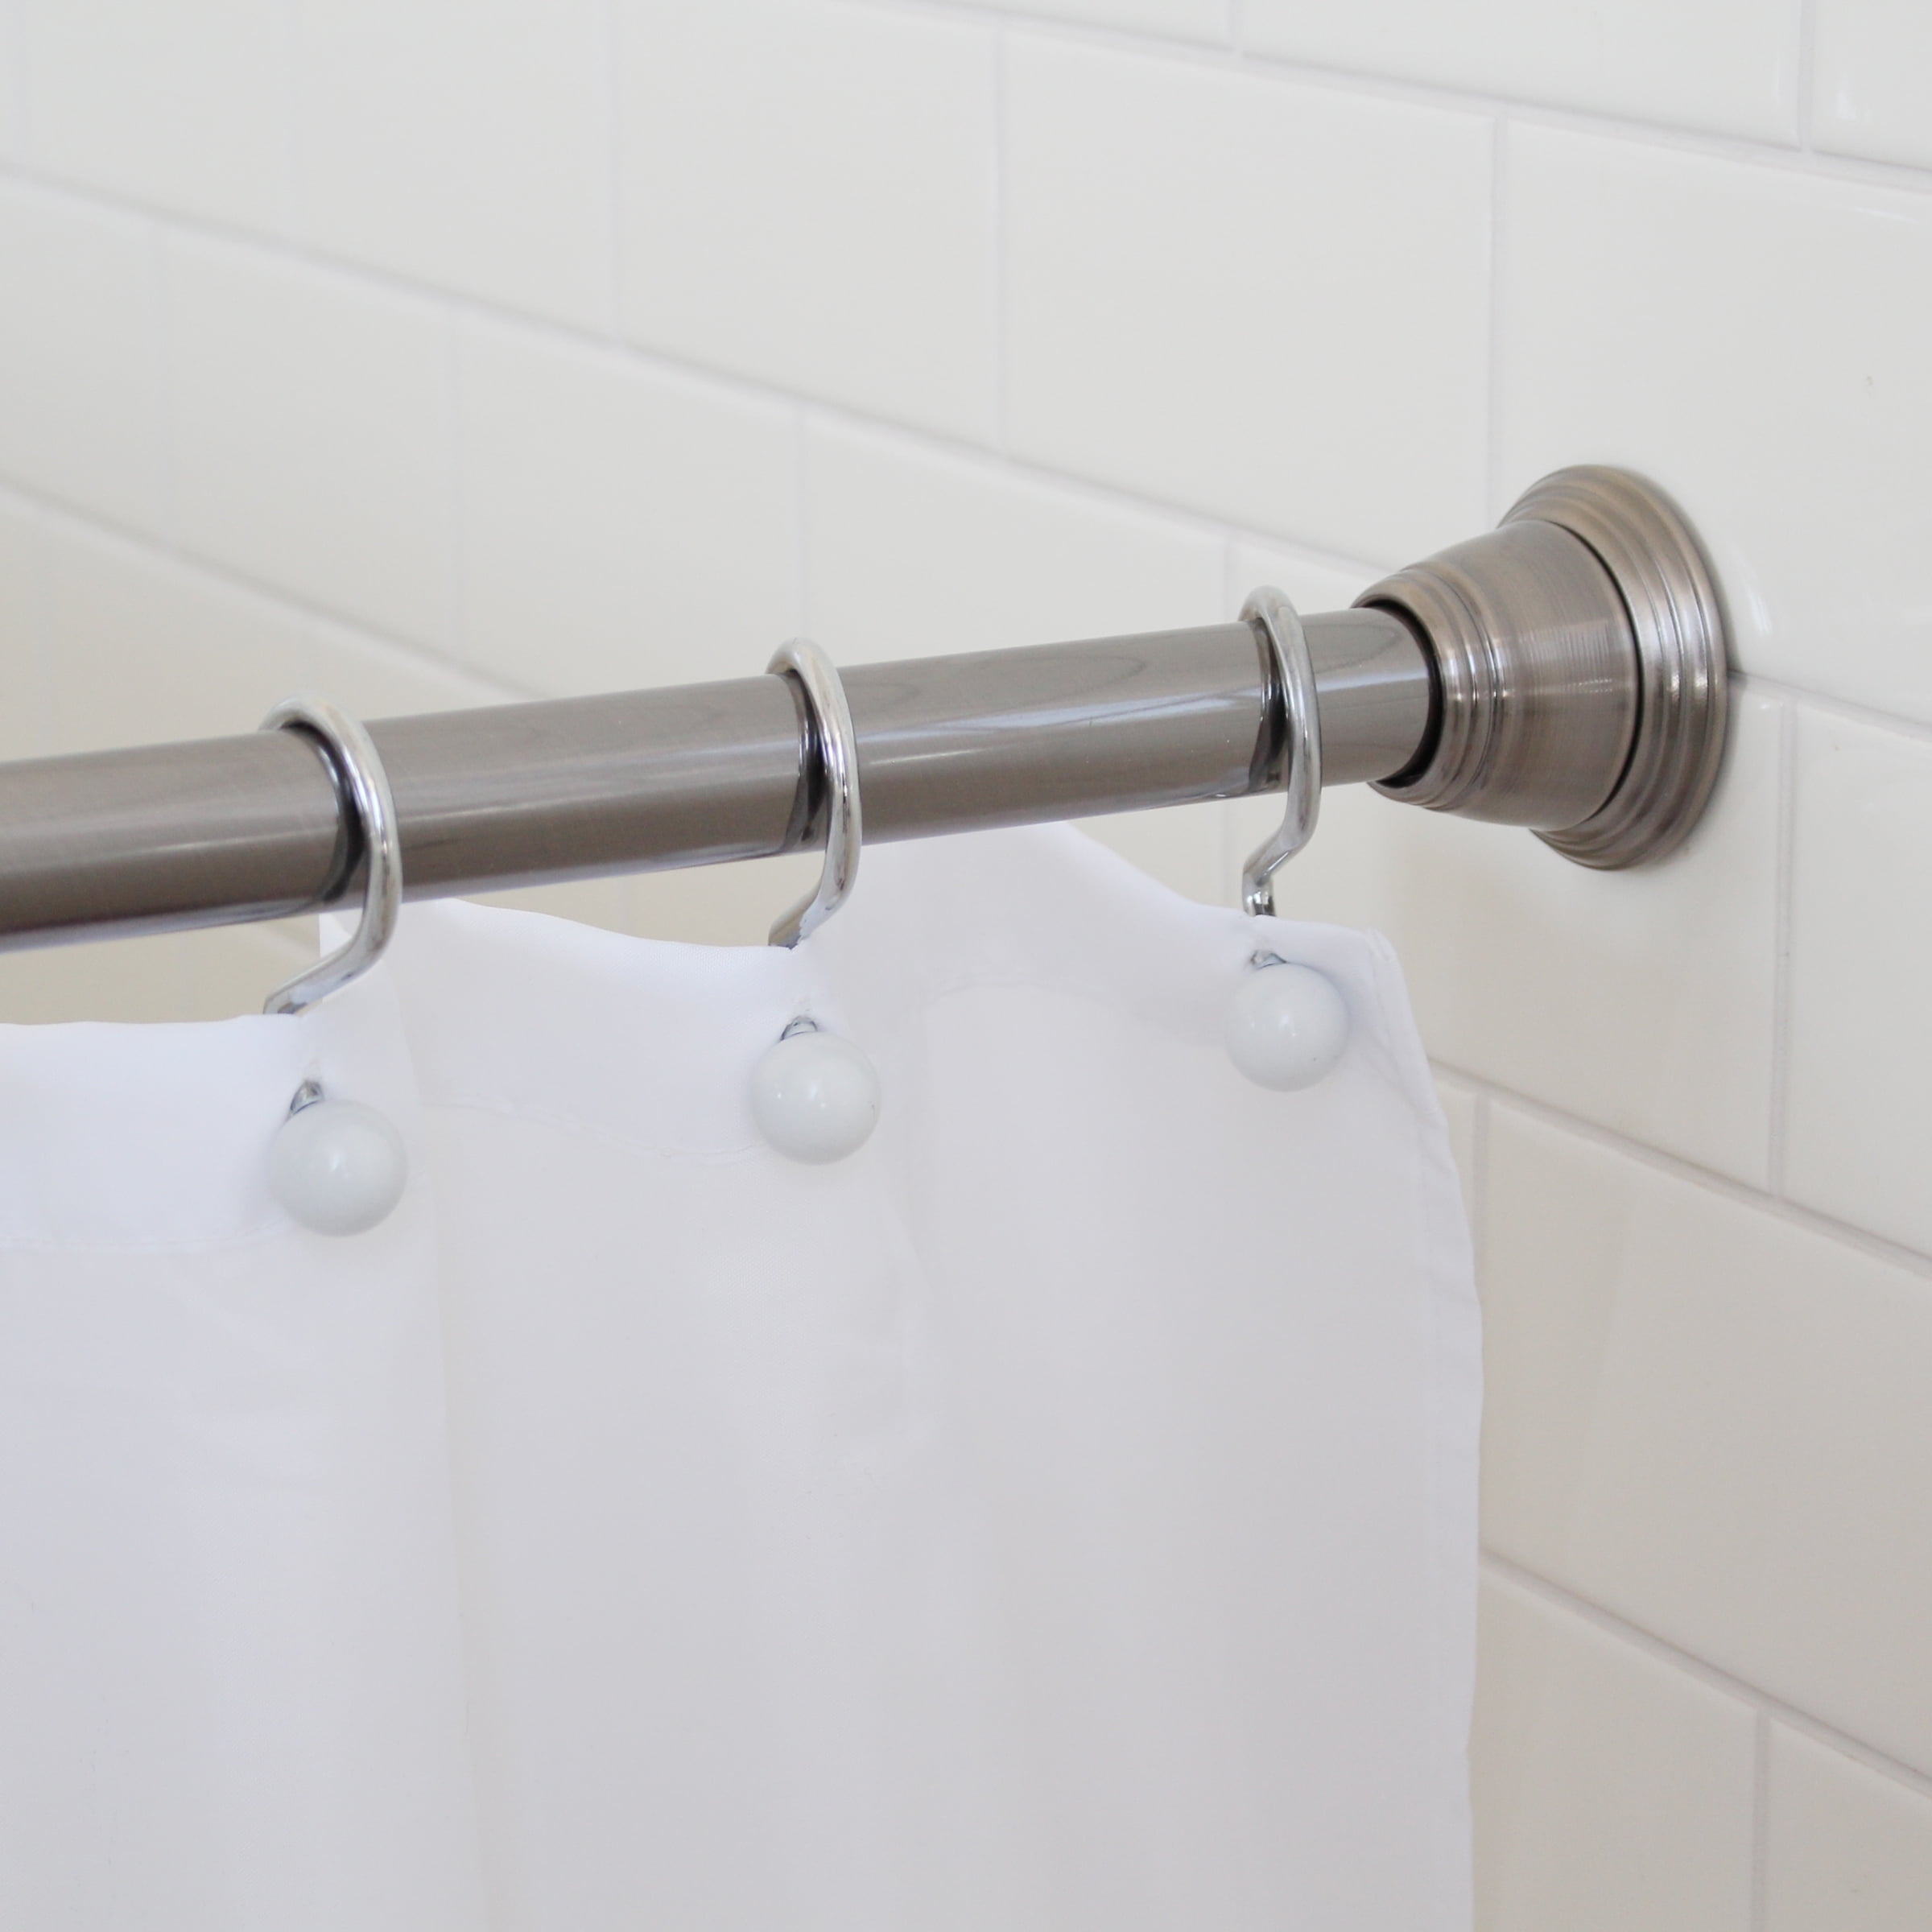 2x Adjustable Curtain Rod Bathroom Shower Tension Spring Extendable Rail White 